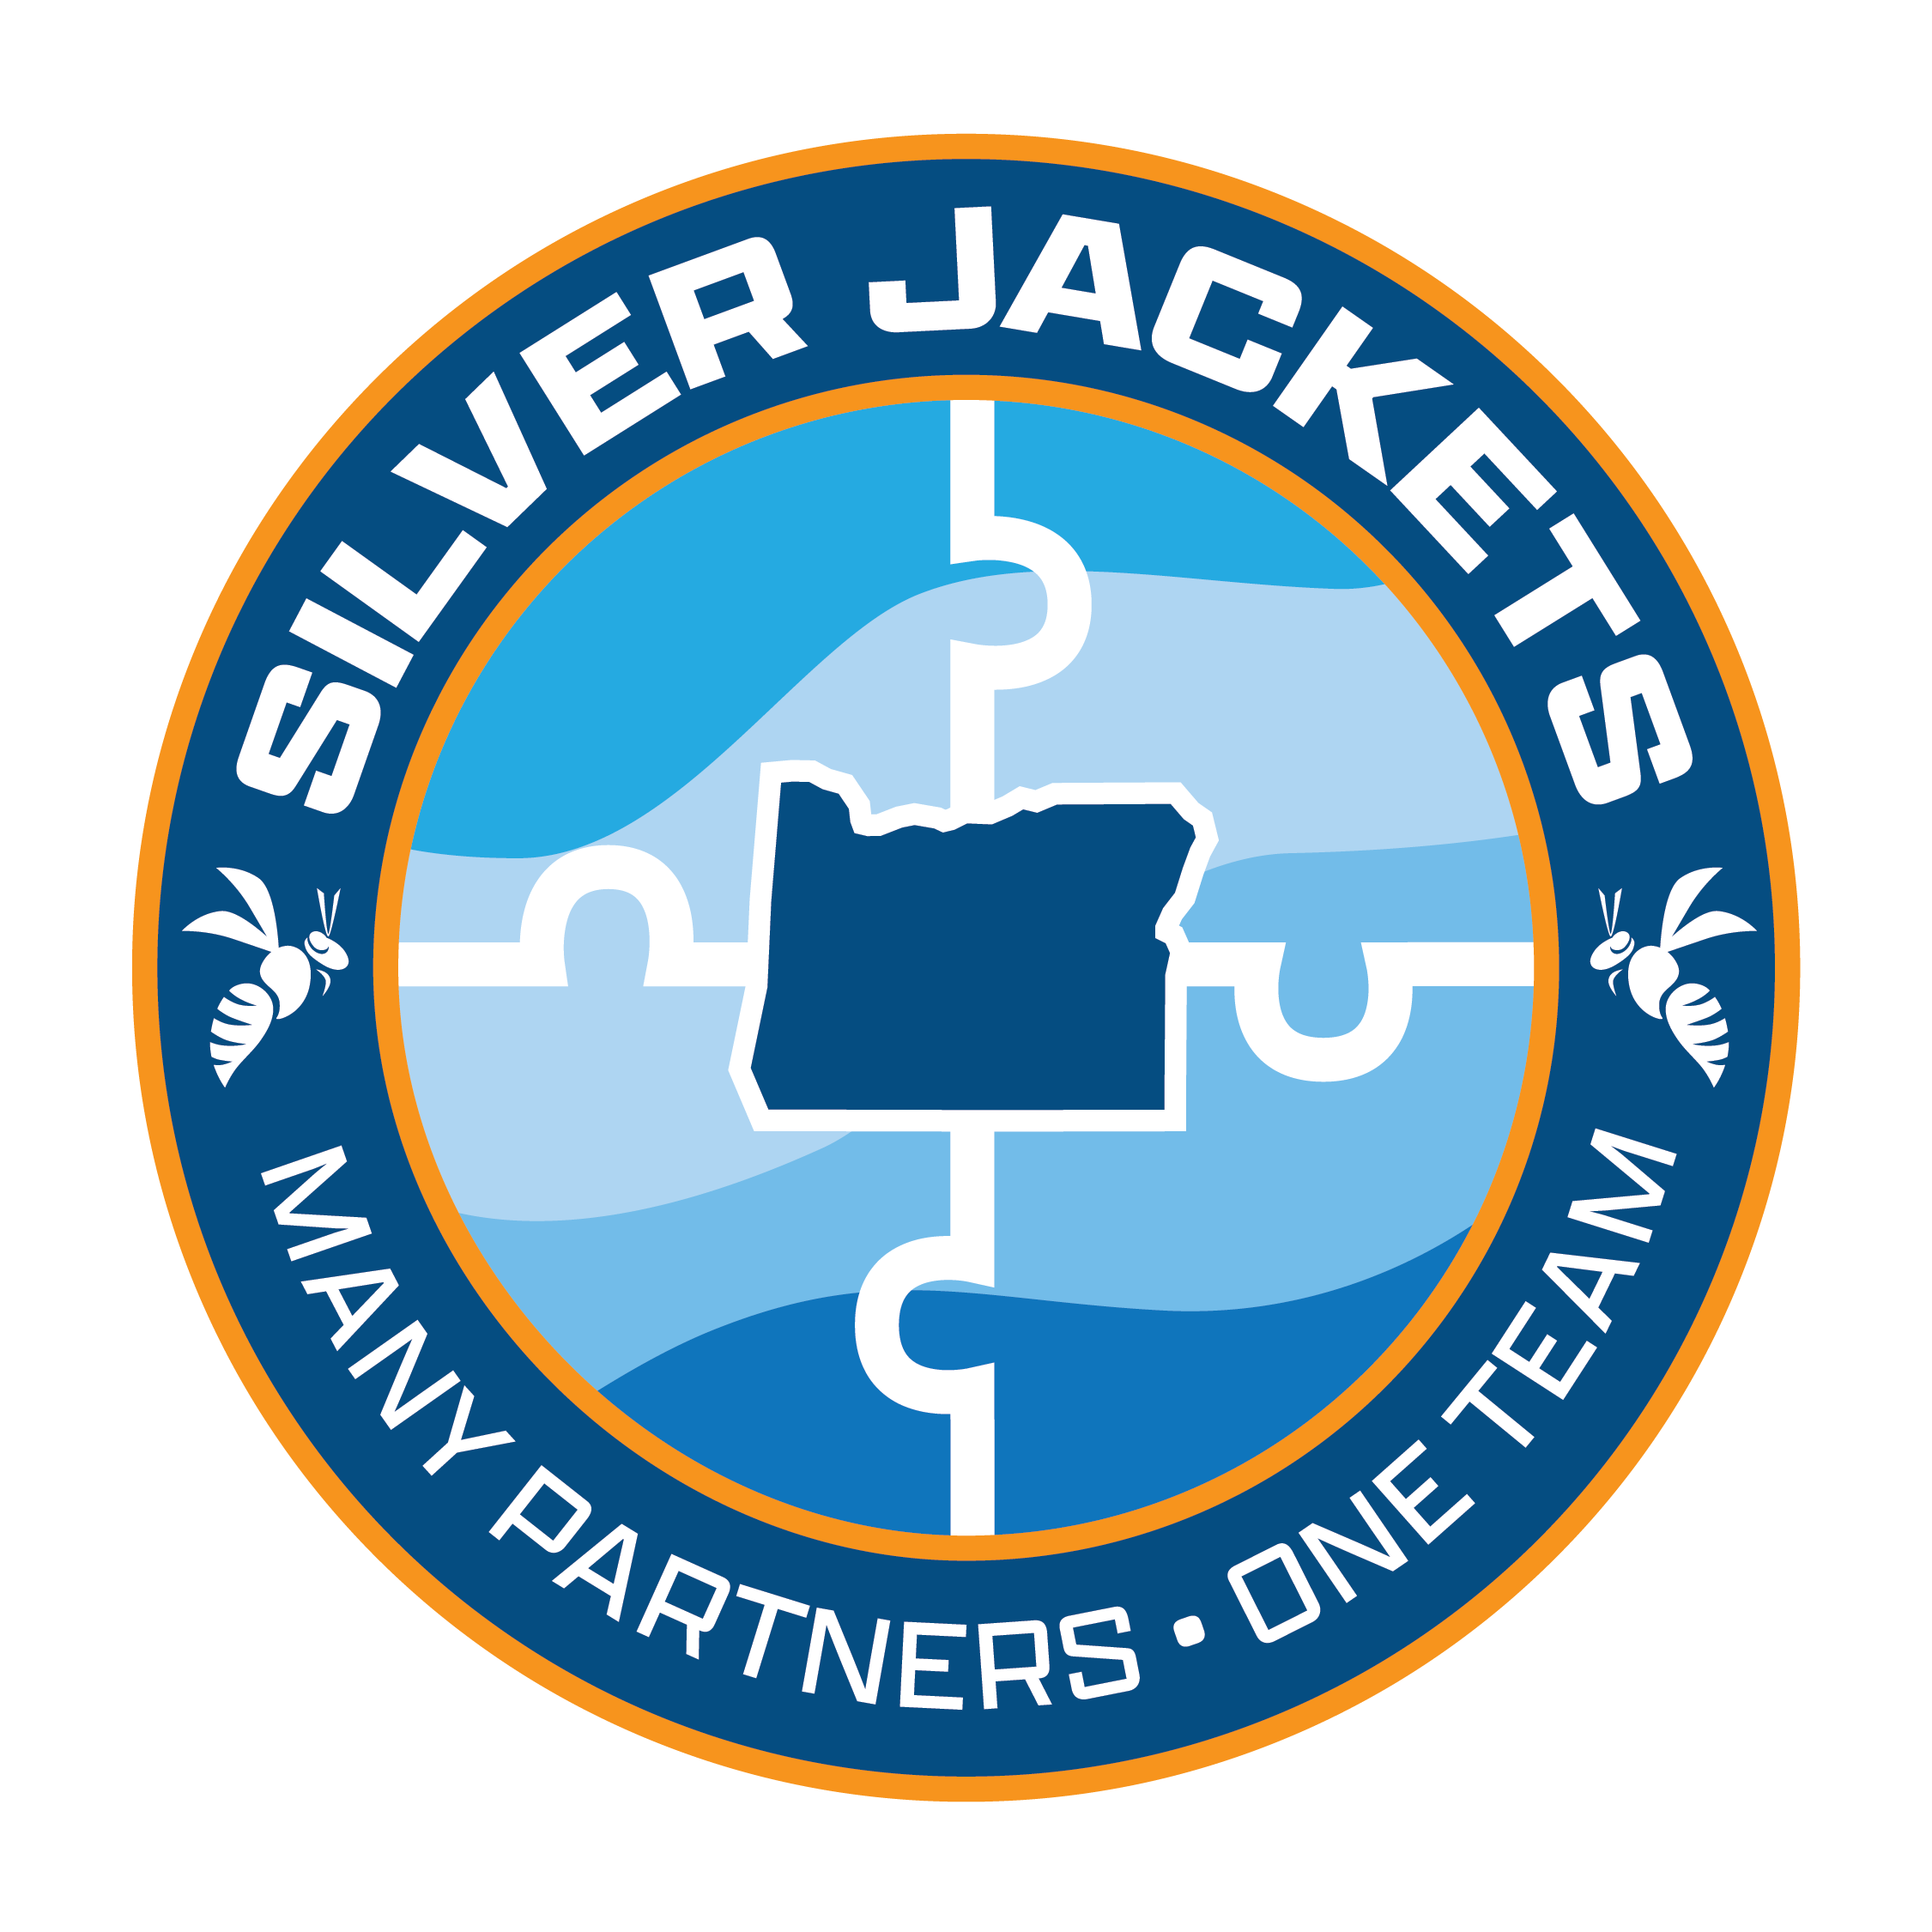 Oregon Silver Jackets logo